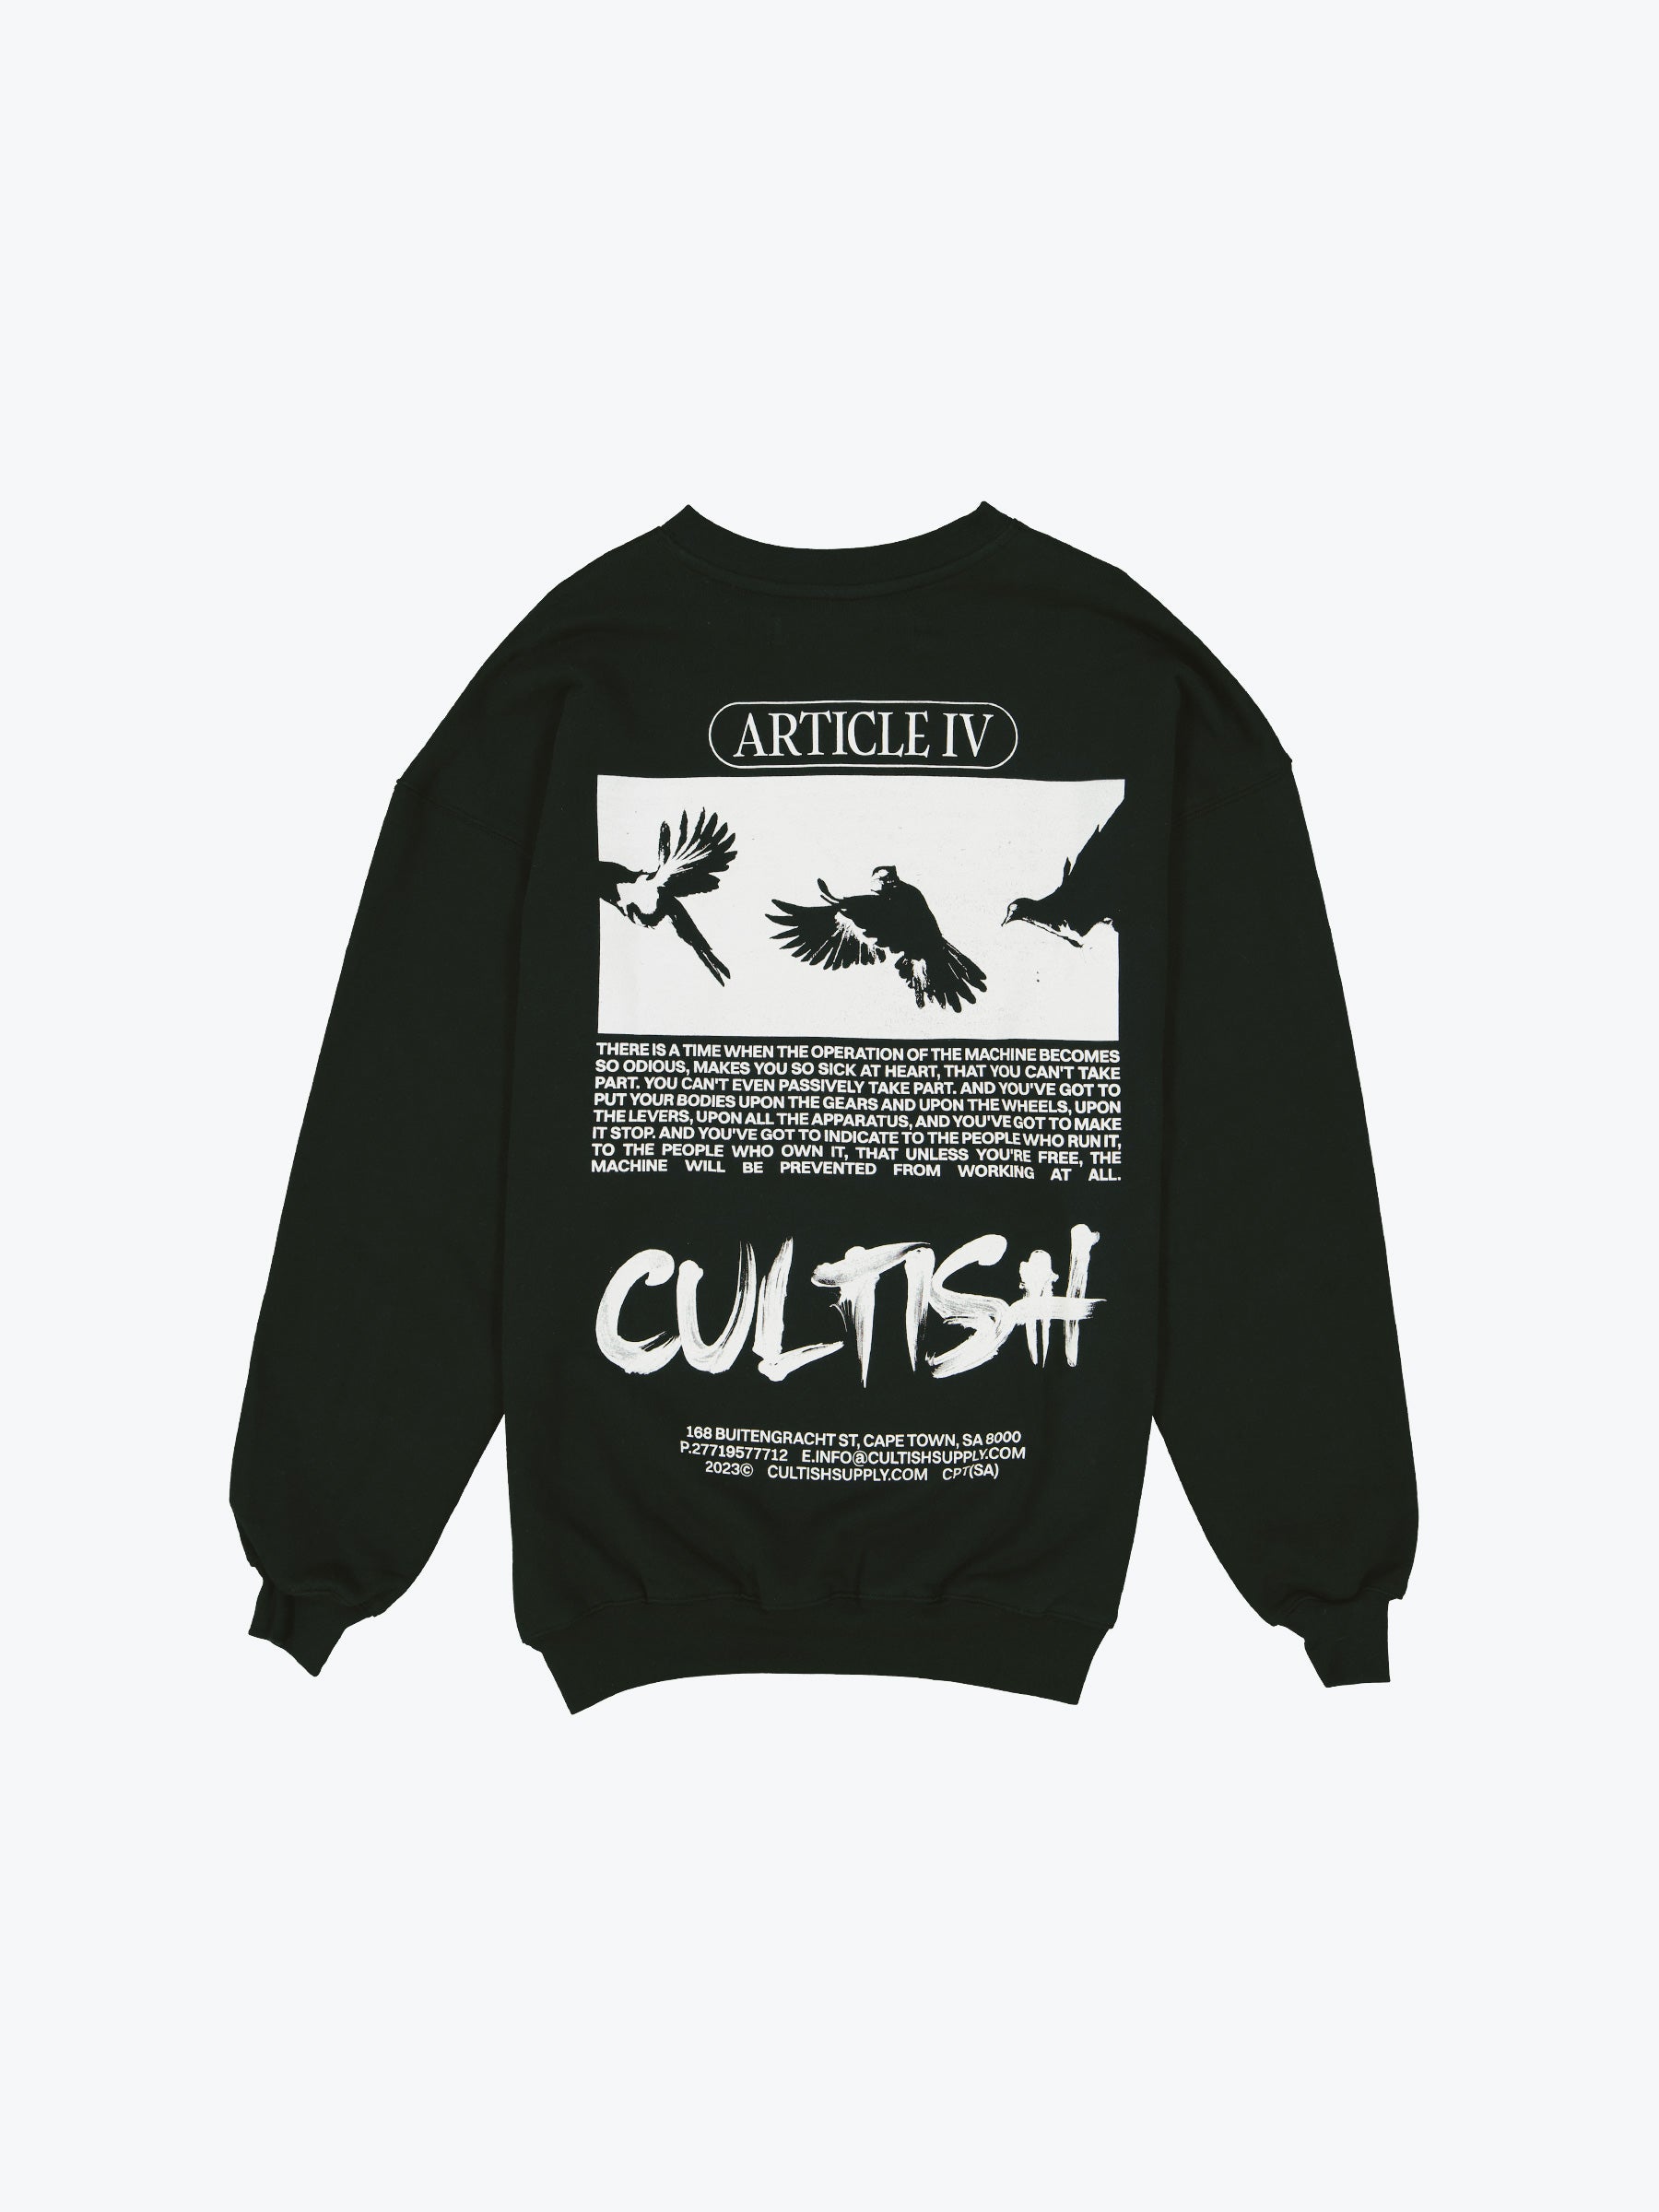 Black A/IV Oversized Sweater